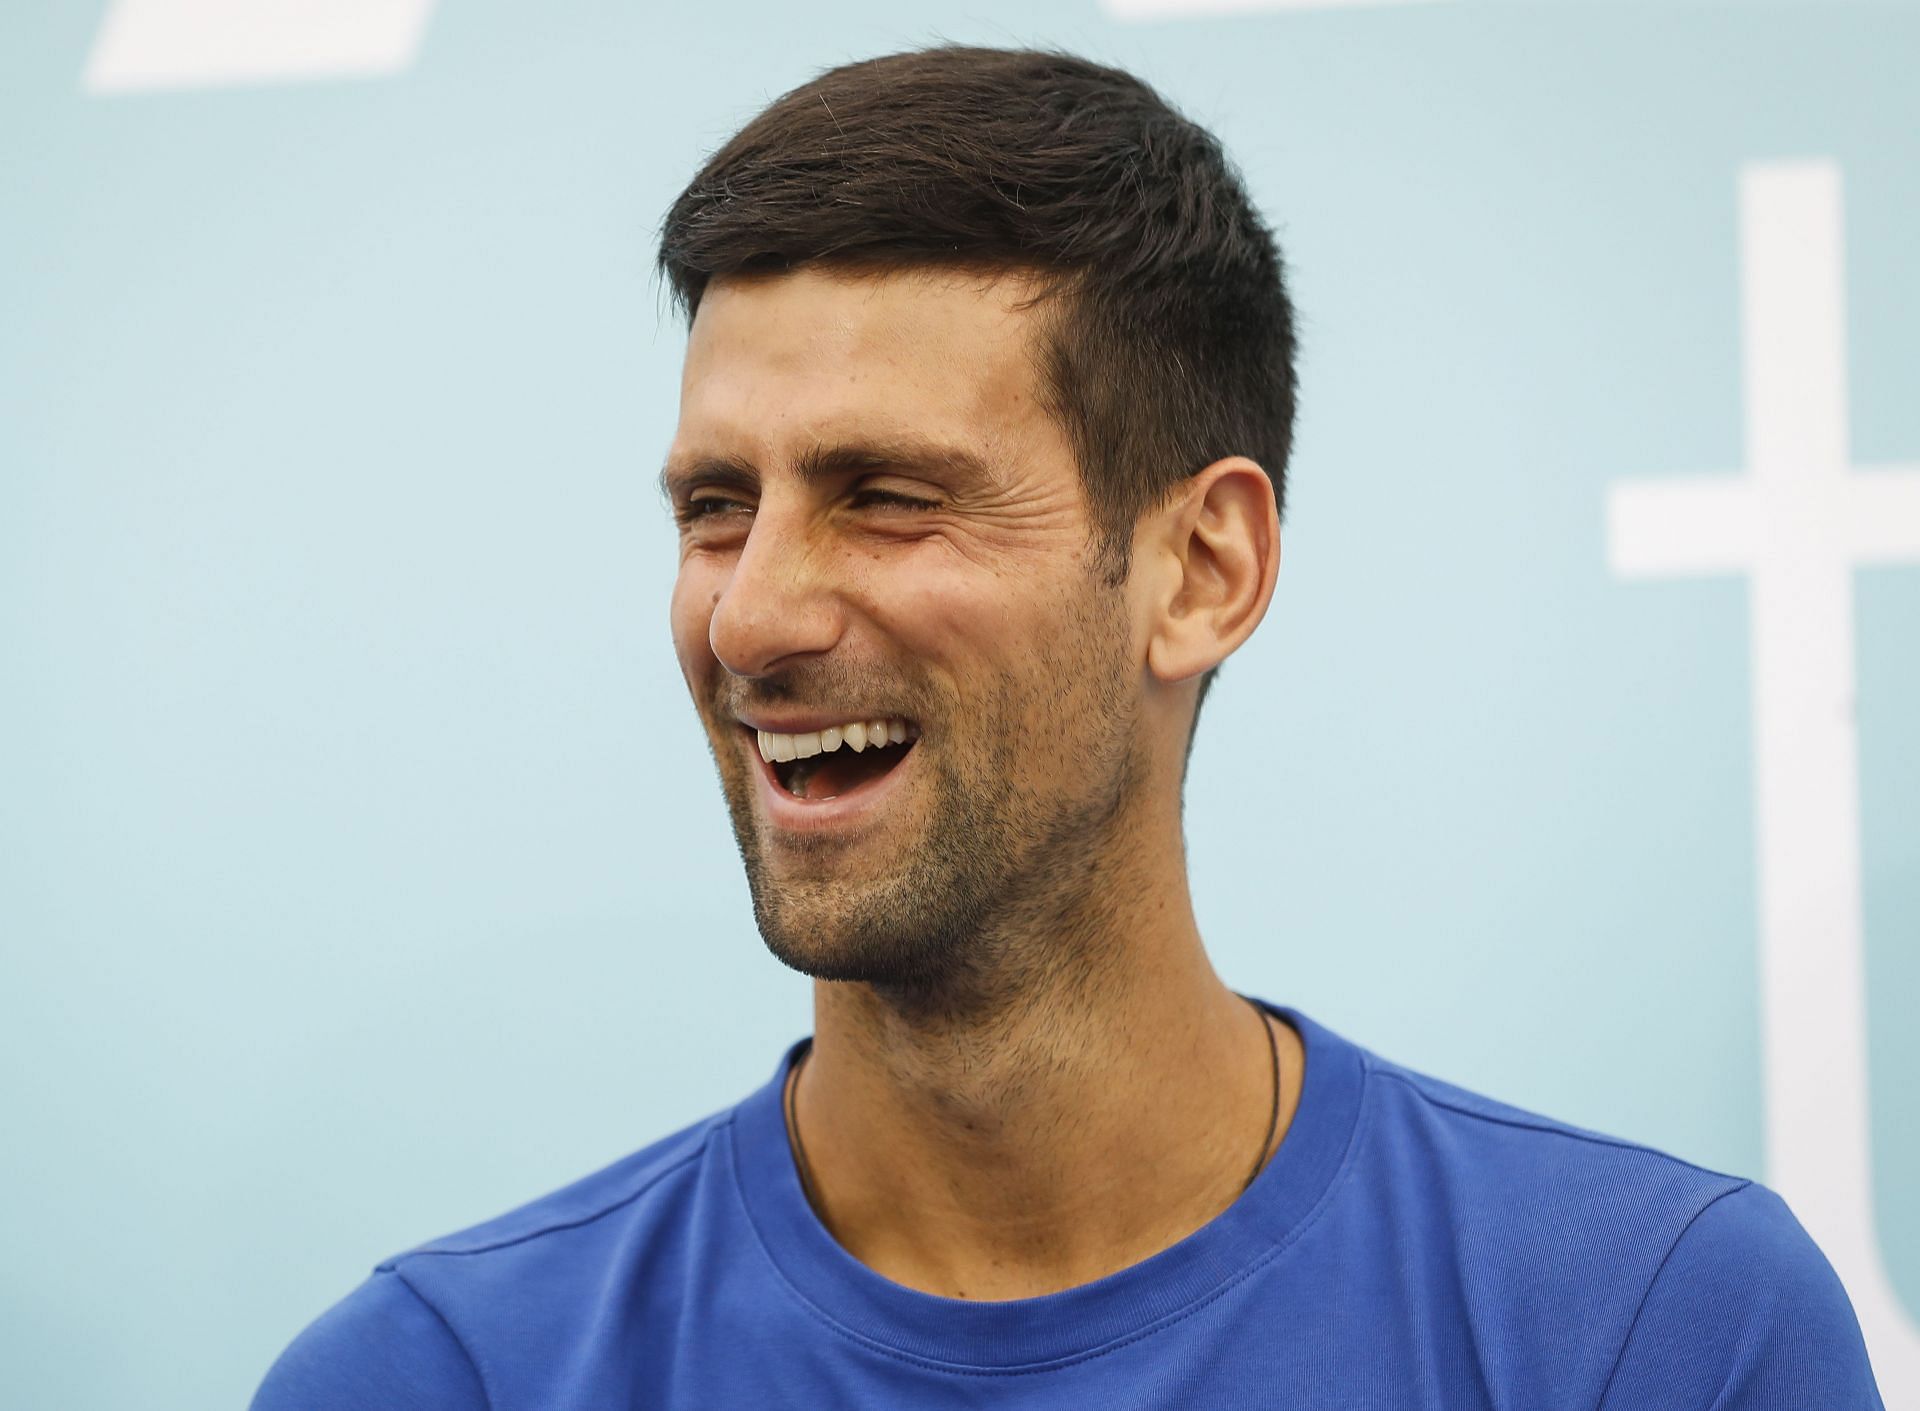 Novak Djokovic getting a medical exemption has left fans on social media fuming